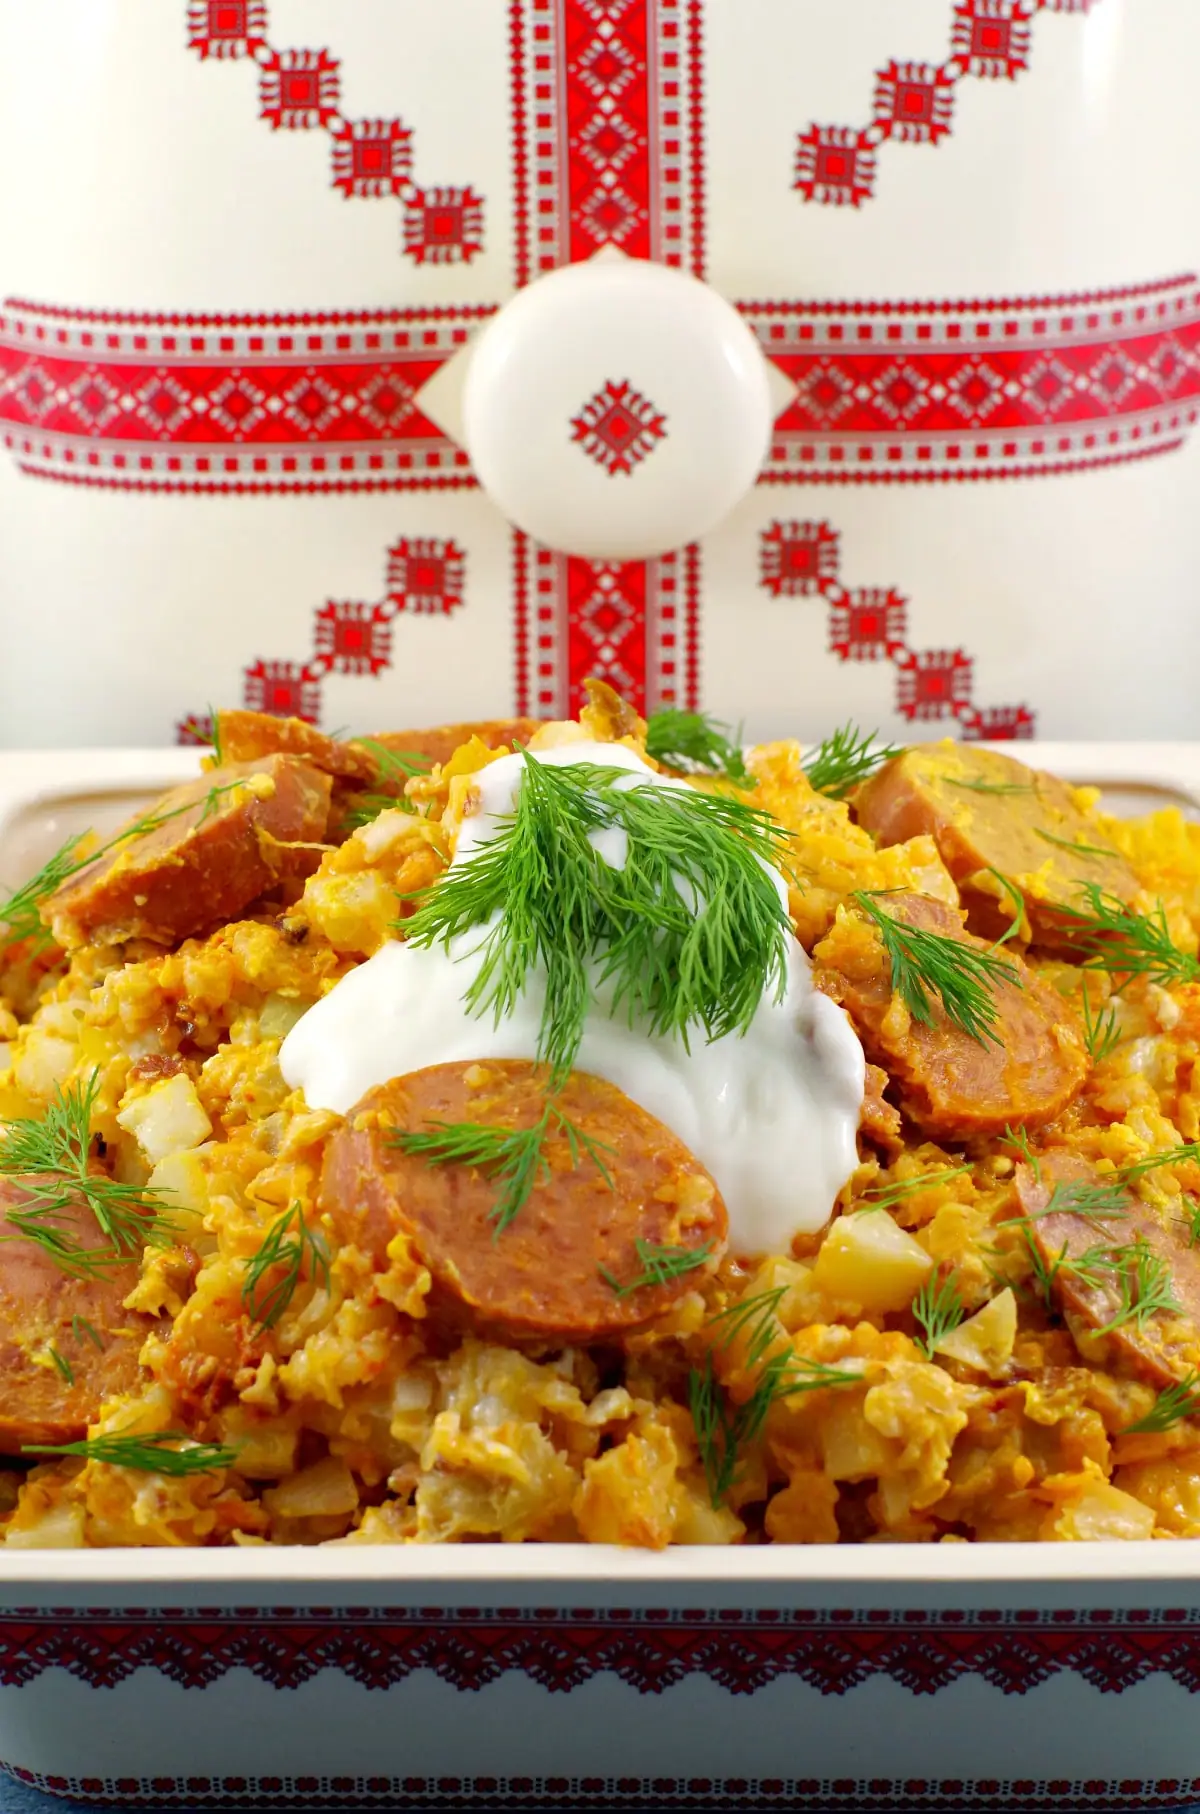 Ukrainian recipe for slow cooker casserole